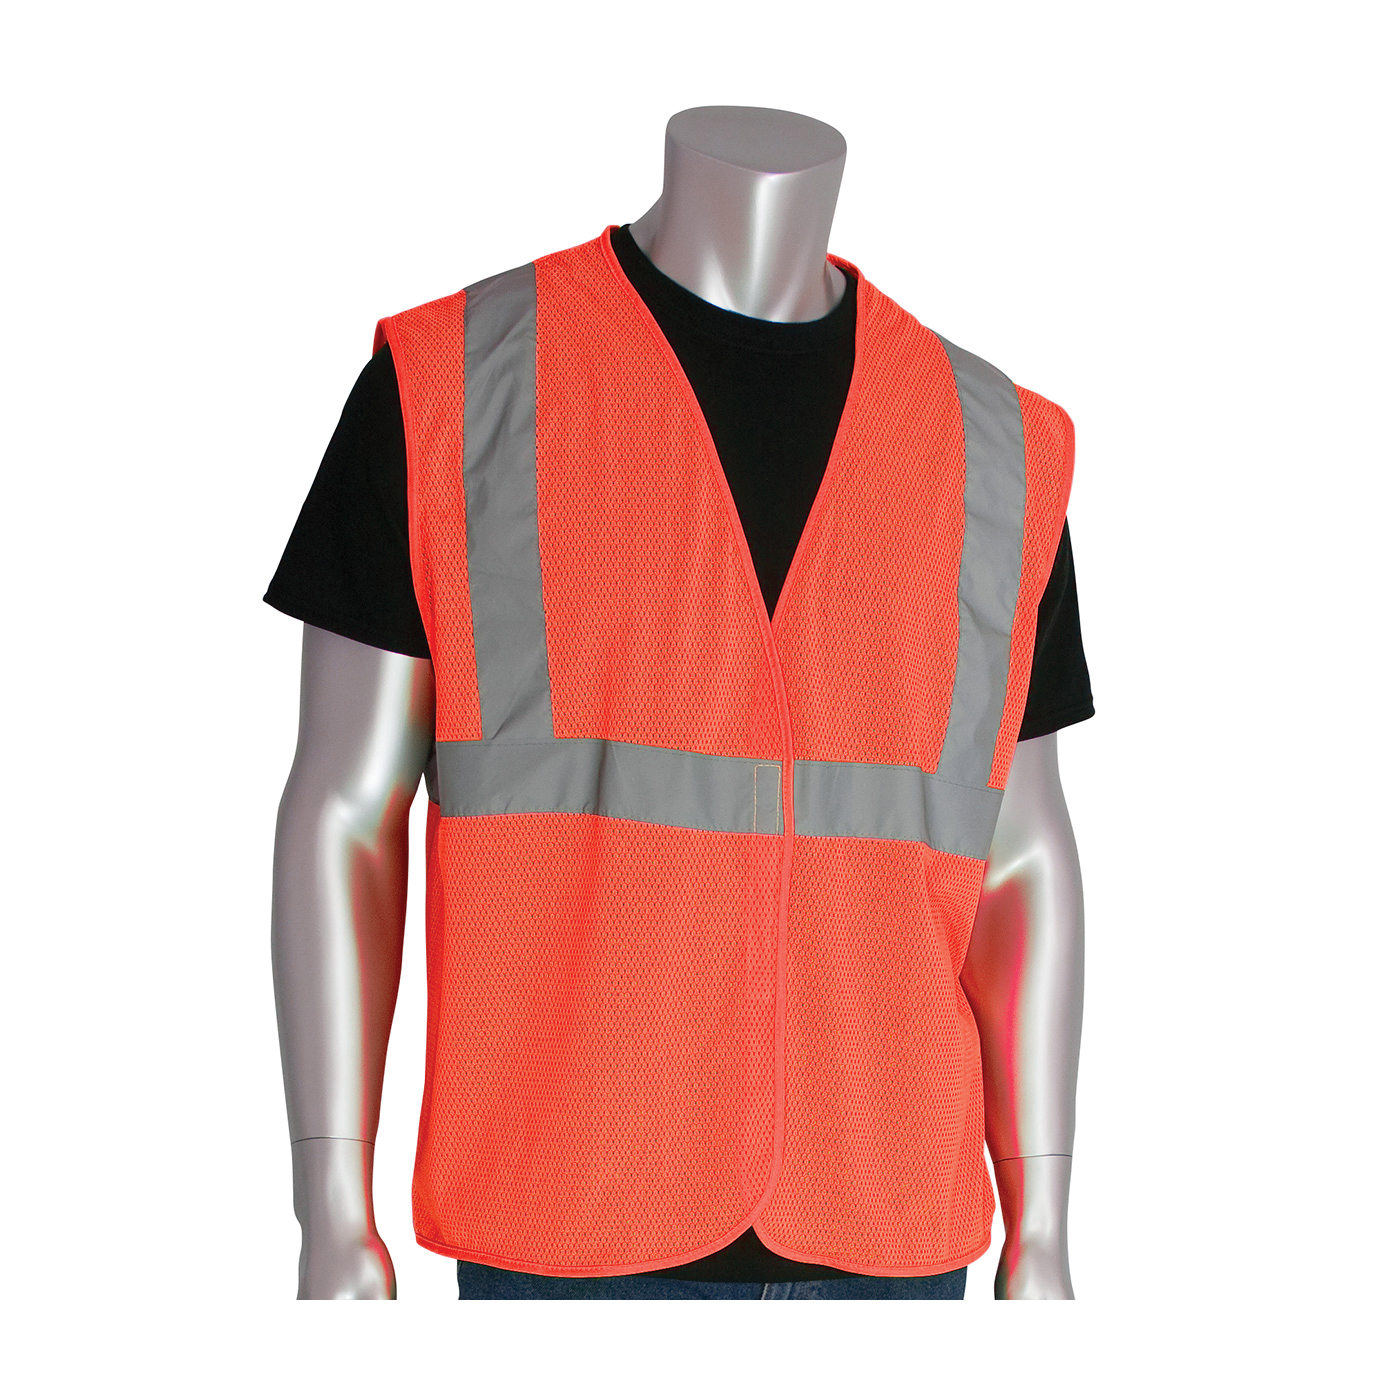 PIP® 302-MVGOR-L Safety Vest, L, Hi-Viz Orange, Polyester Mesh, Hook and Loop Closure, ANSI Class: Class 2, Specifications Met: ANSI 107 Type R